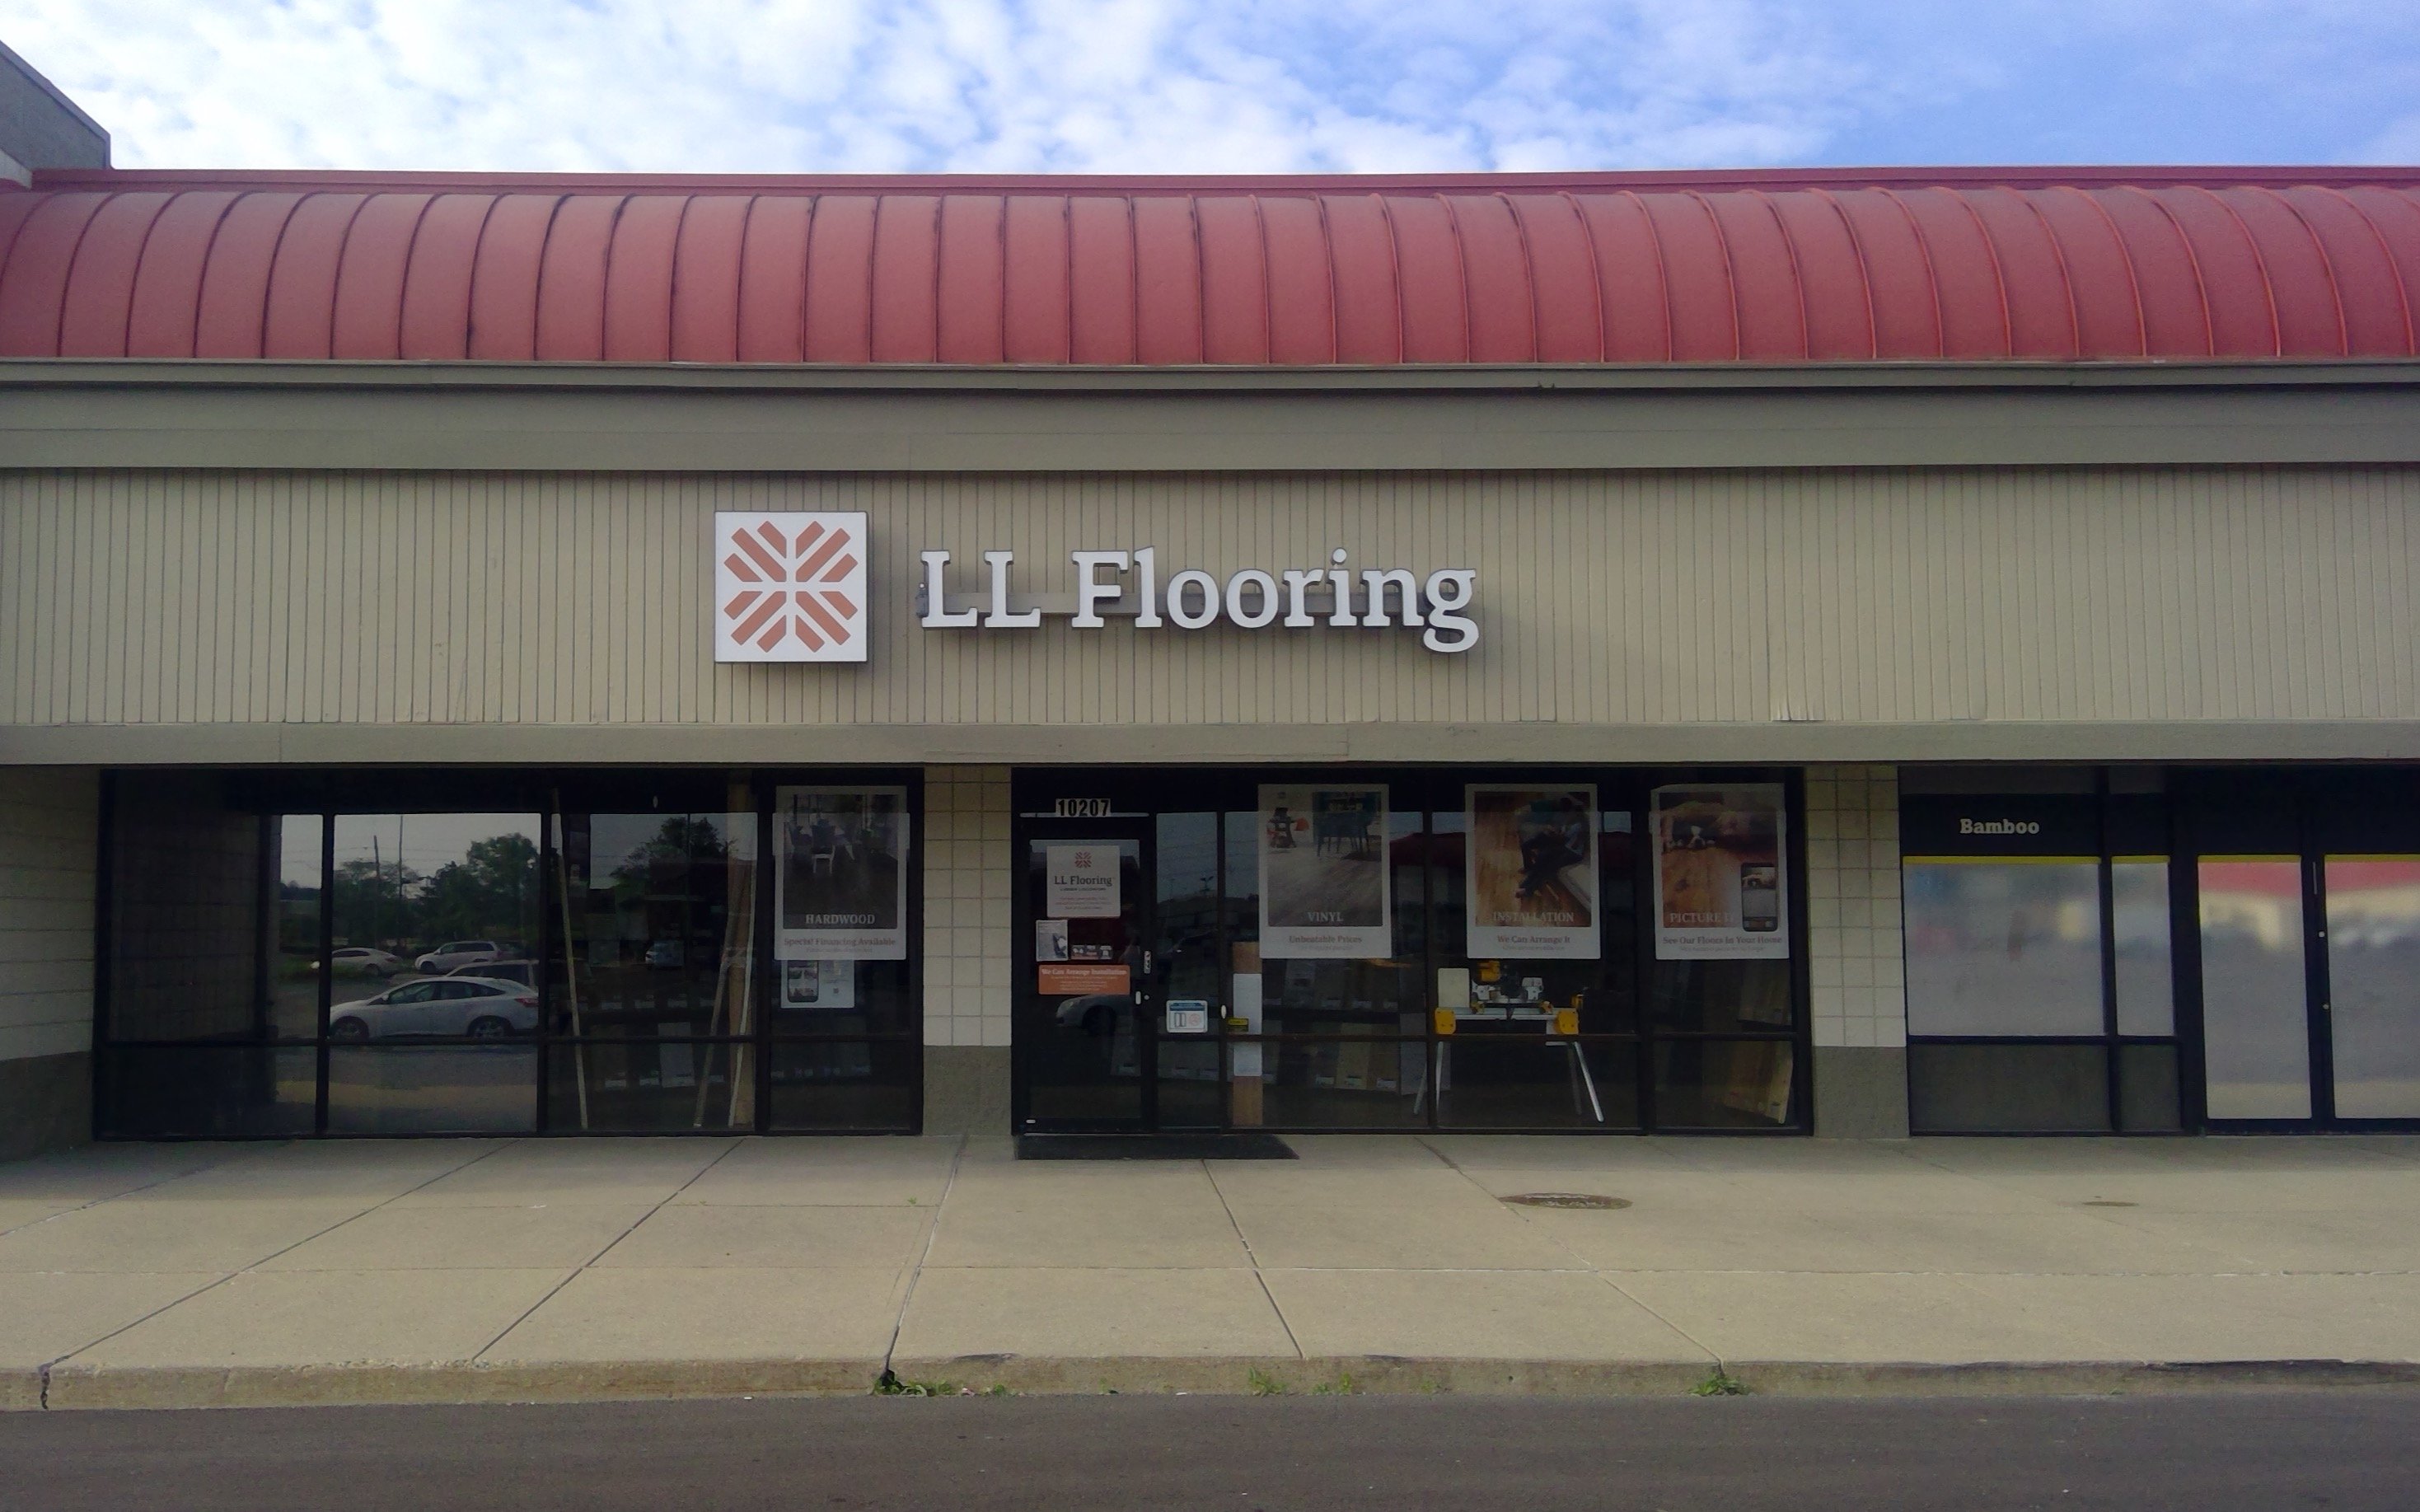 LL Flooring #1370 East Indianapolis | 10207 East Washington Street | Storefront